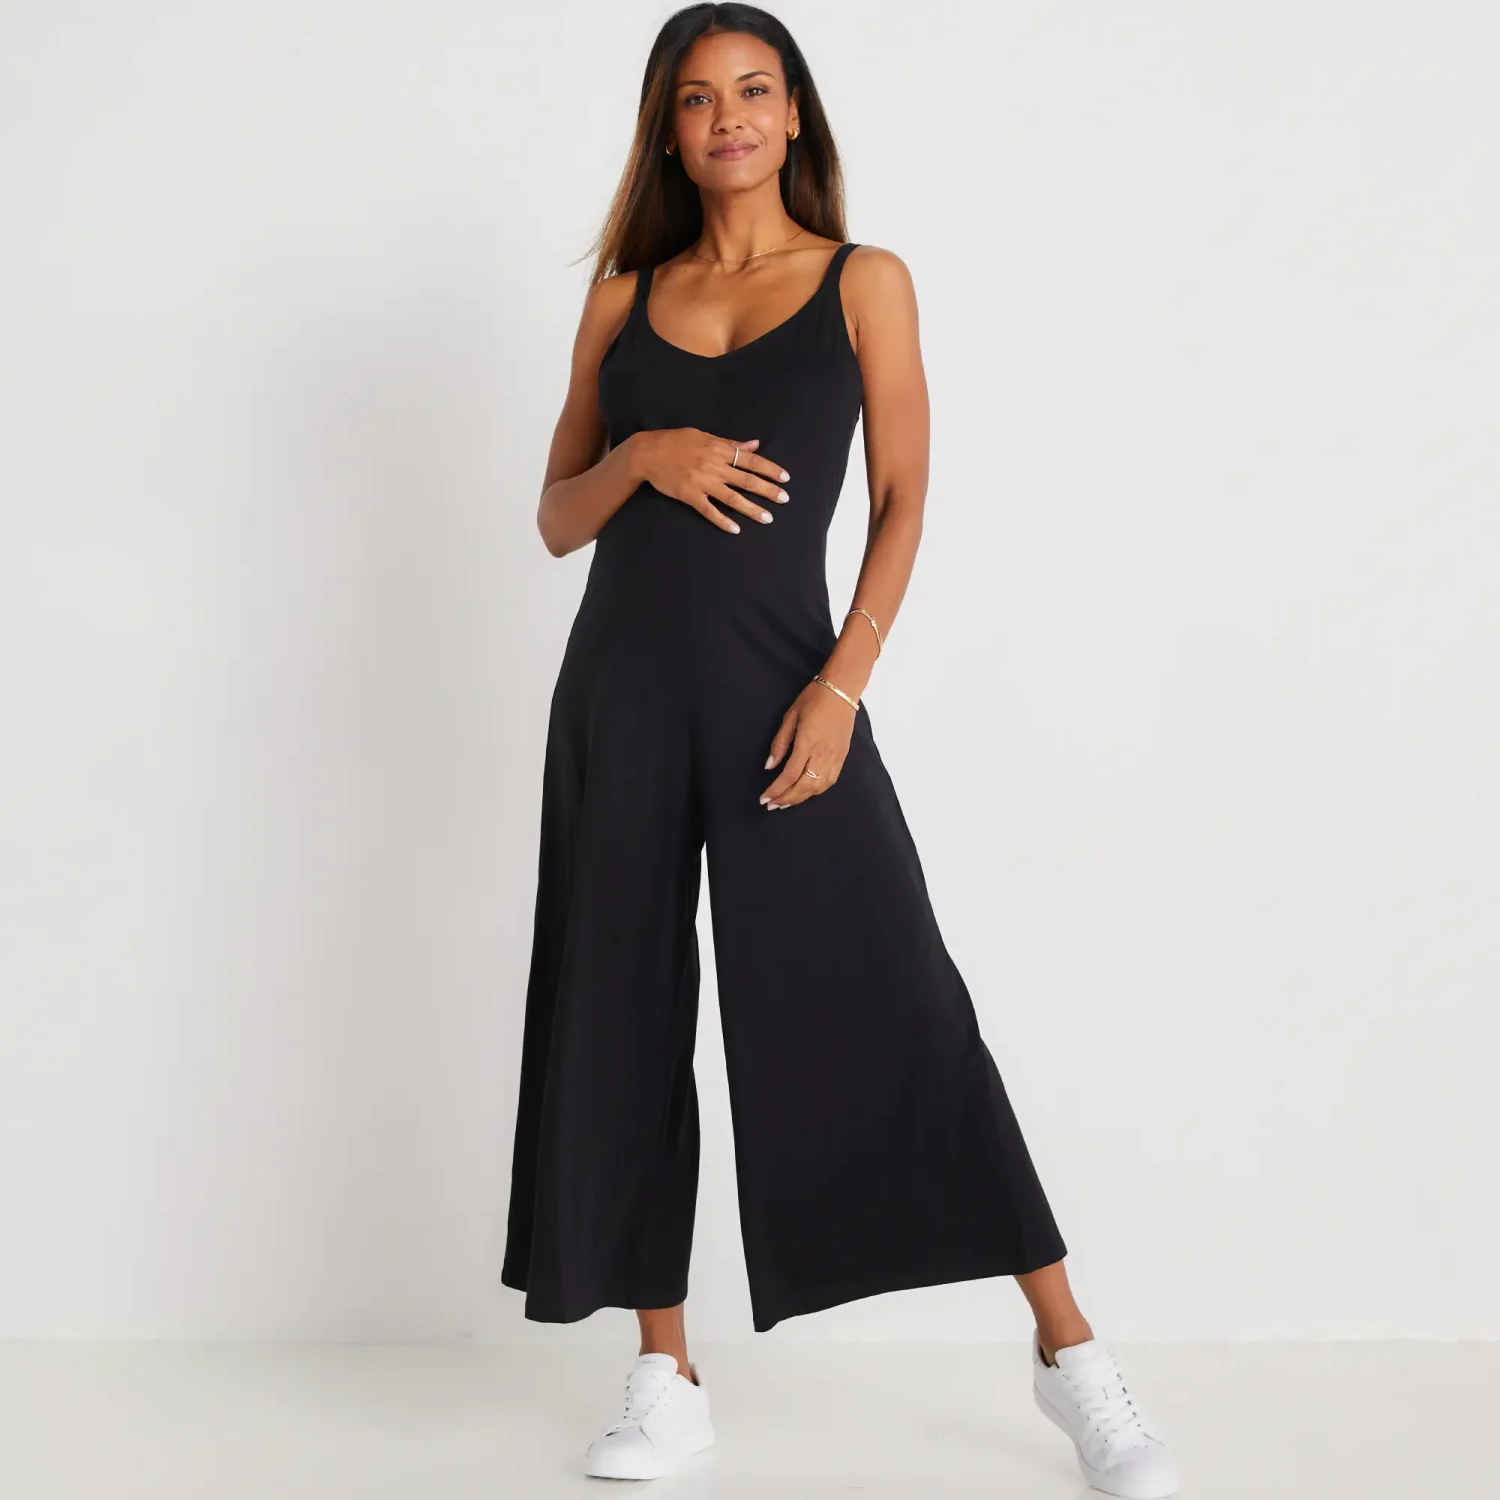 Eberjey brand contemporary and stylish maternity friendly black soft jumpsuits